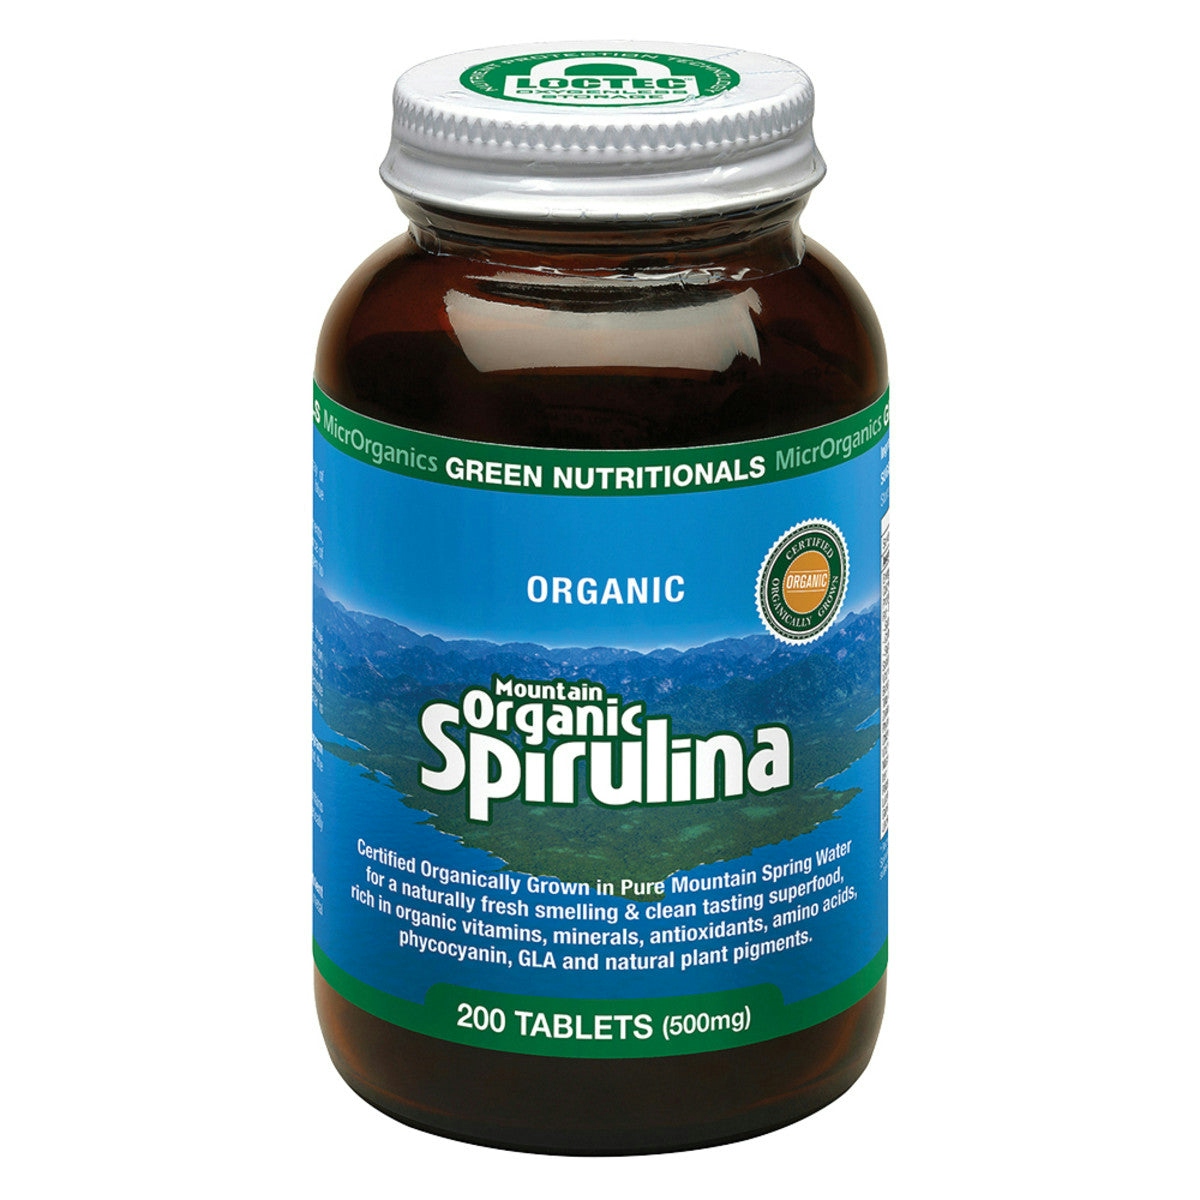 image of MicrOrganics Green Nutritionals Mountain Organic Spirulina 500mg 200t on white background 